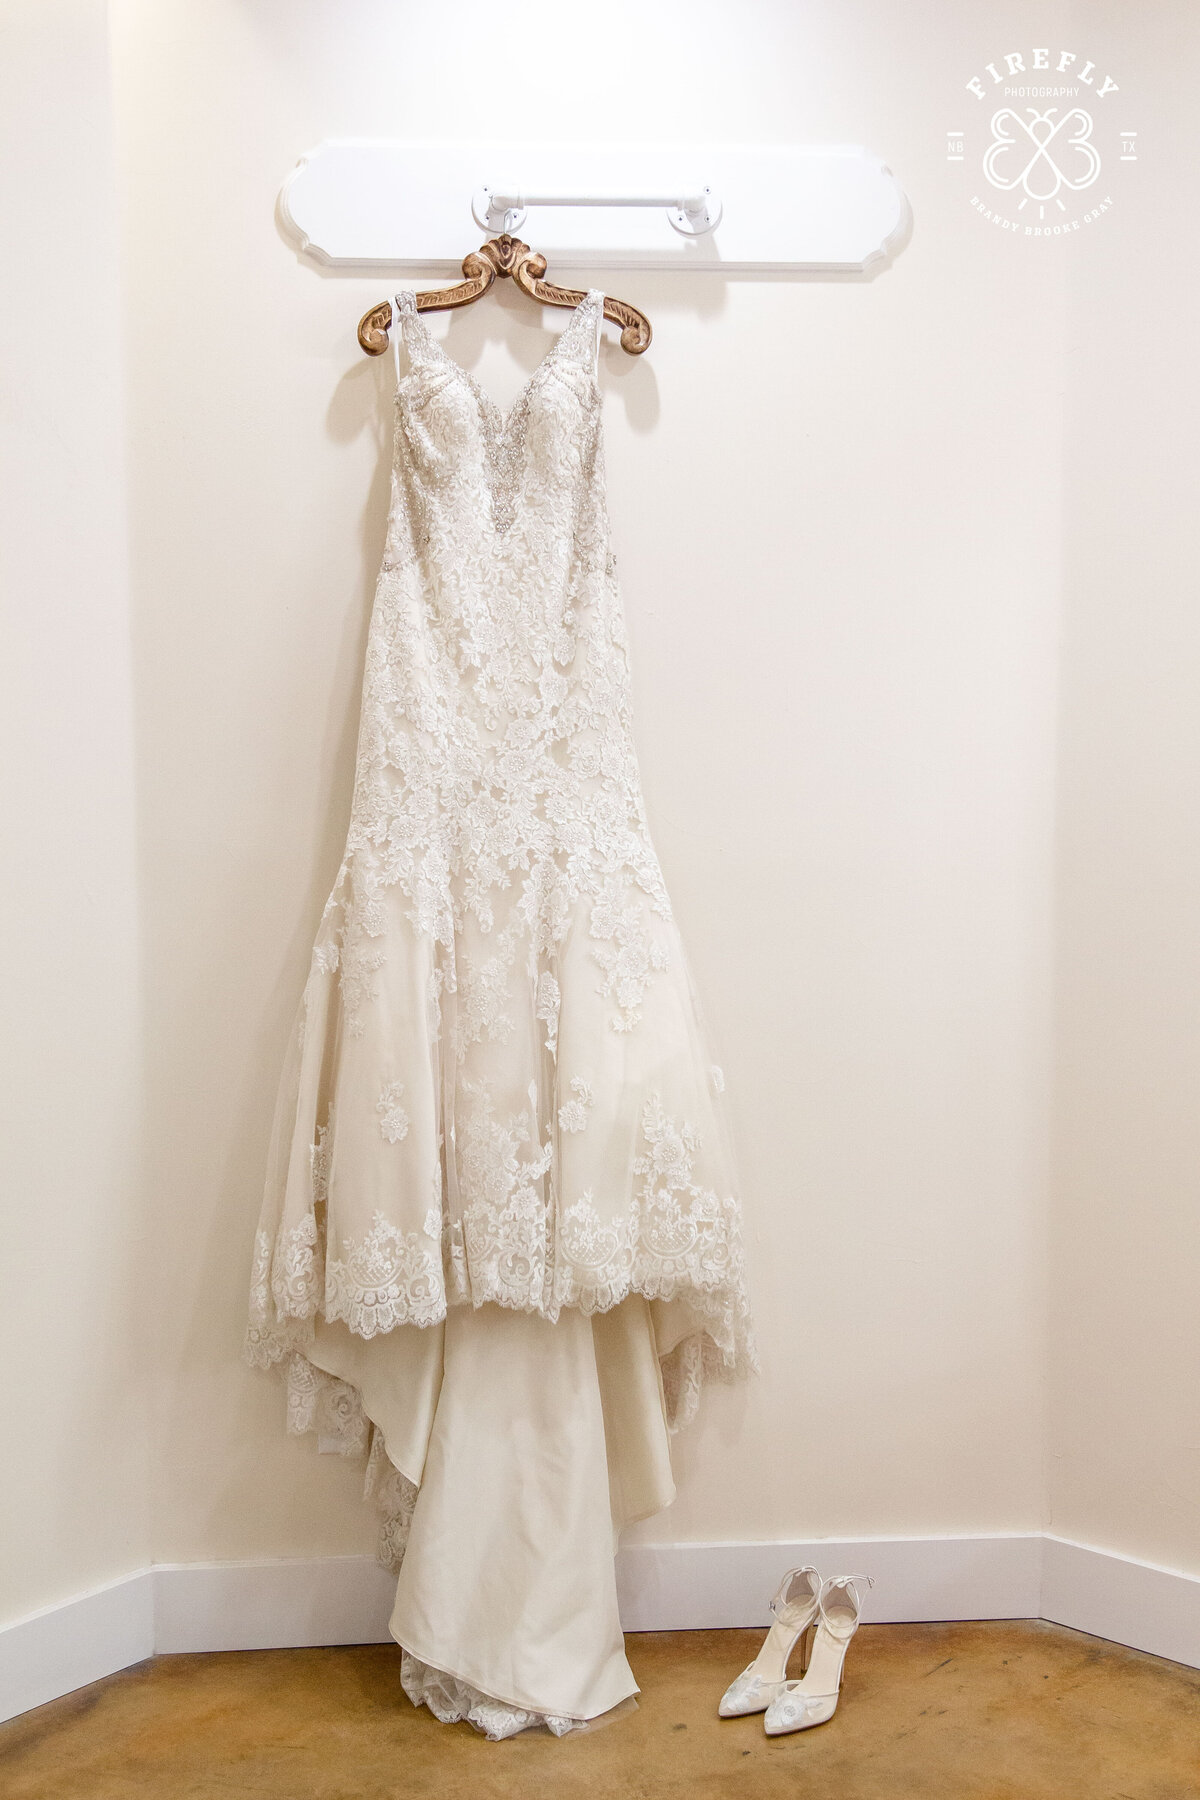 wedding dress detail hanging on vintage hanger Sendera Springs in Kerrville Texas